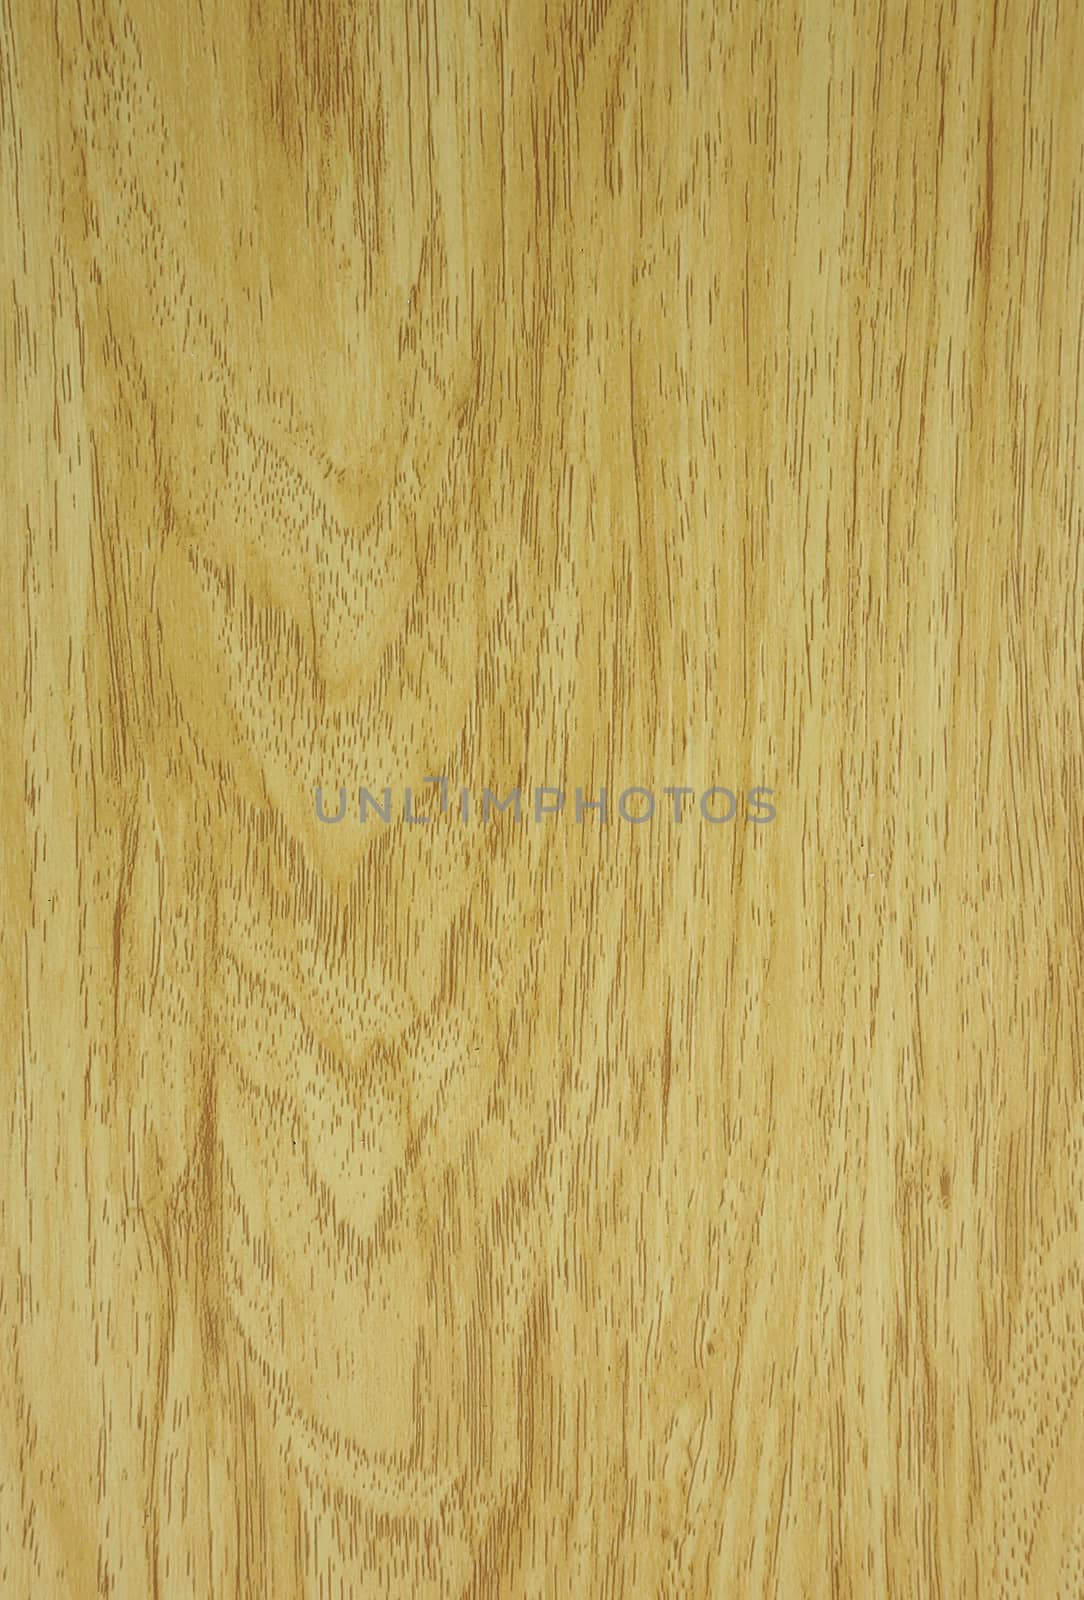 Wood texture by ninun